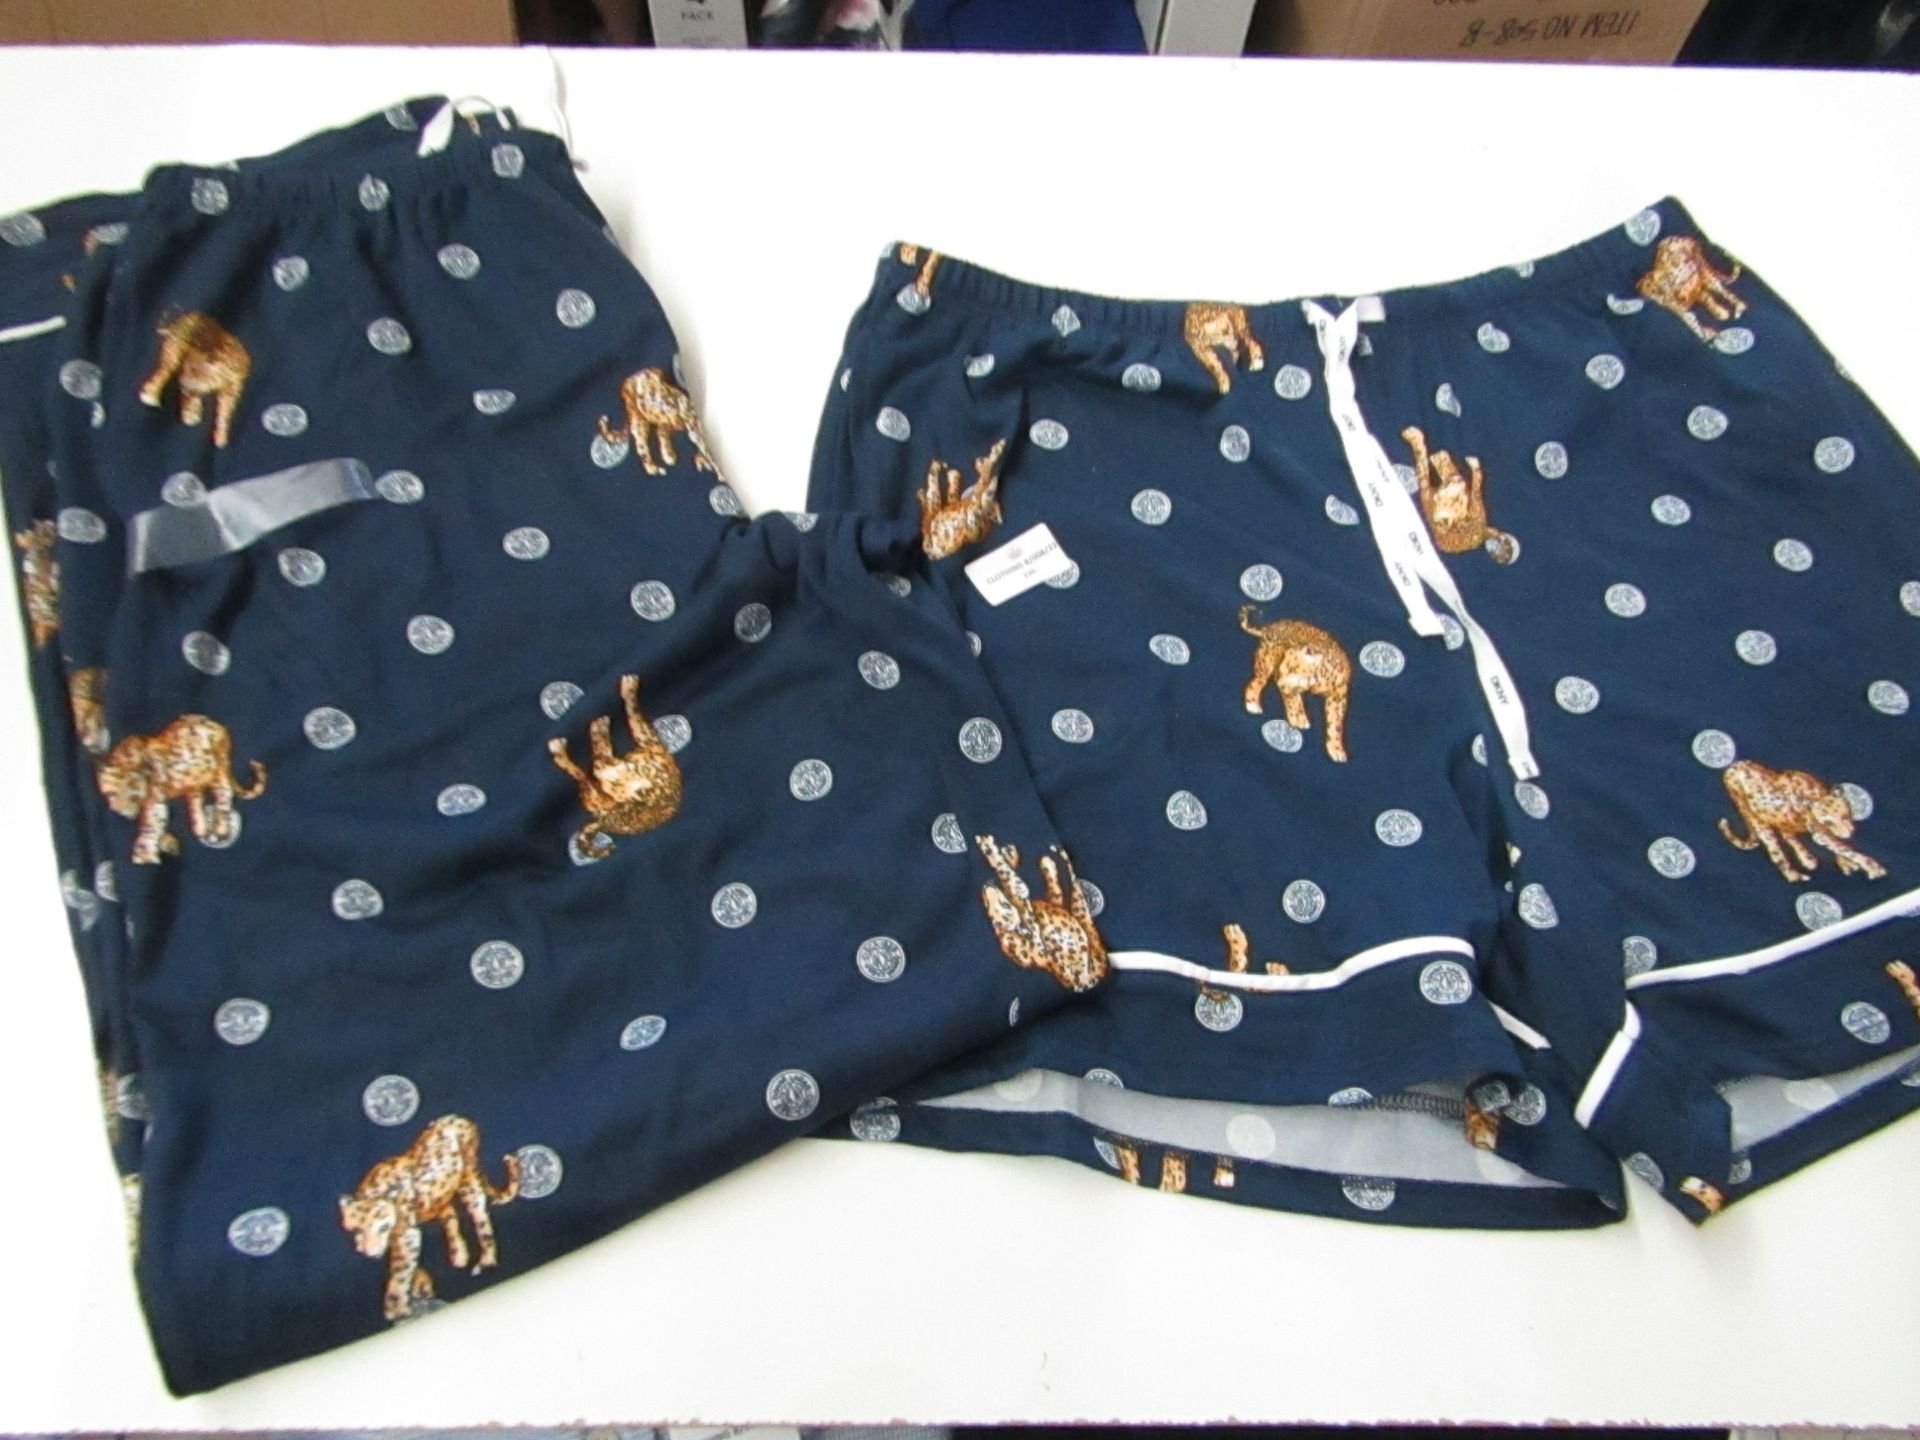 2 X Items Being 1 Pair of DKNY Pyjama Shorts & 1 X Pair of DKNY Pyjama Bottoms Both Size M Both New